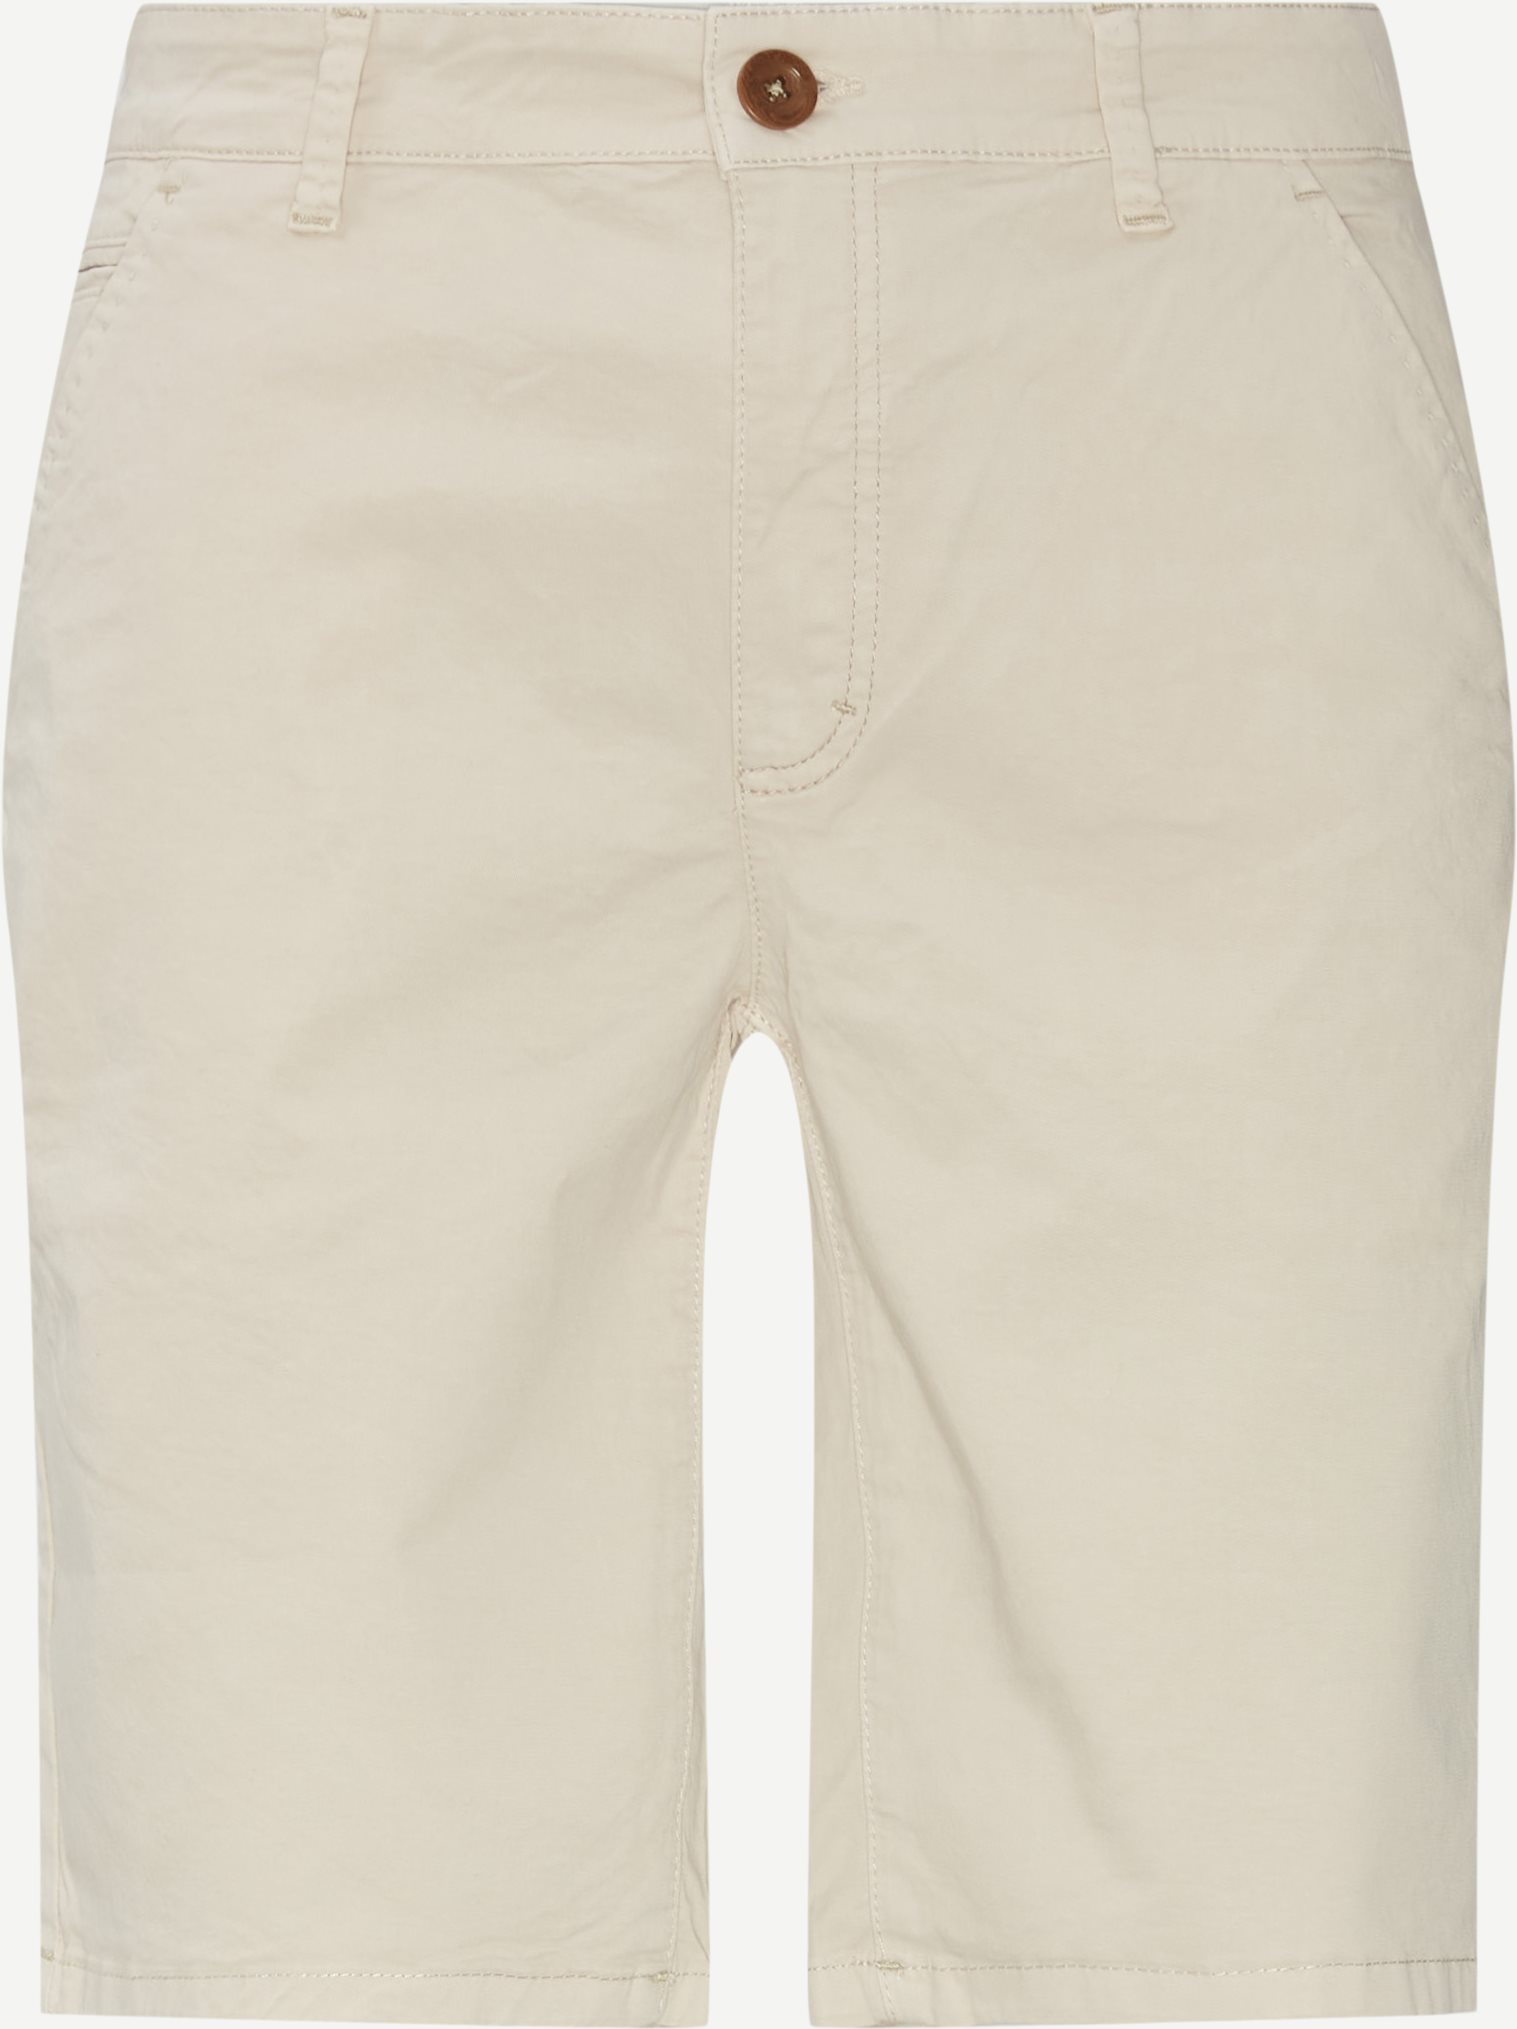 11030 Classic Chino Shorts - Shorts - Regular fit - Sand